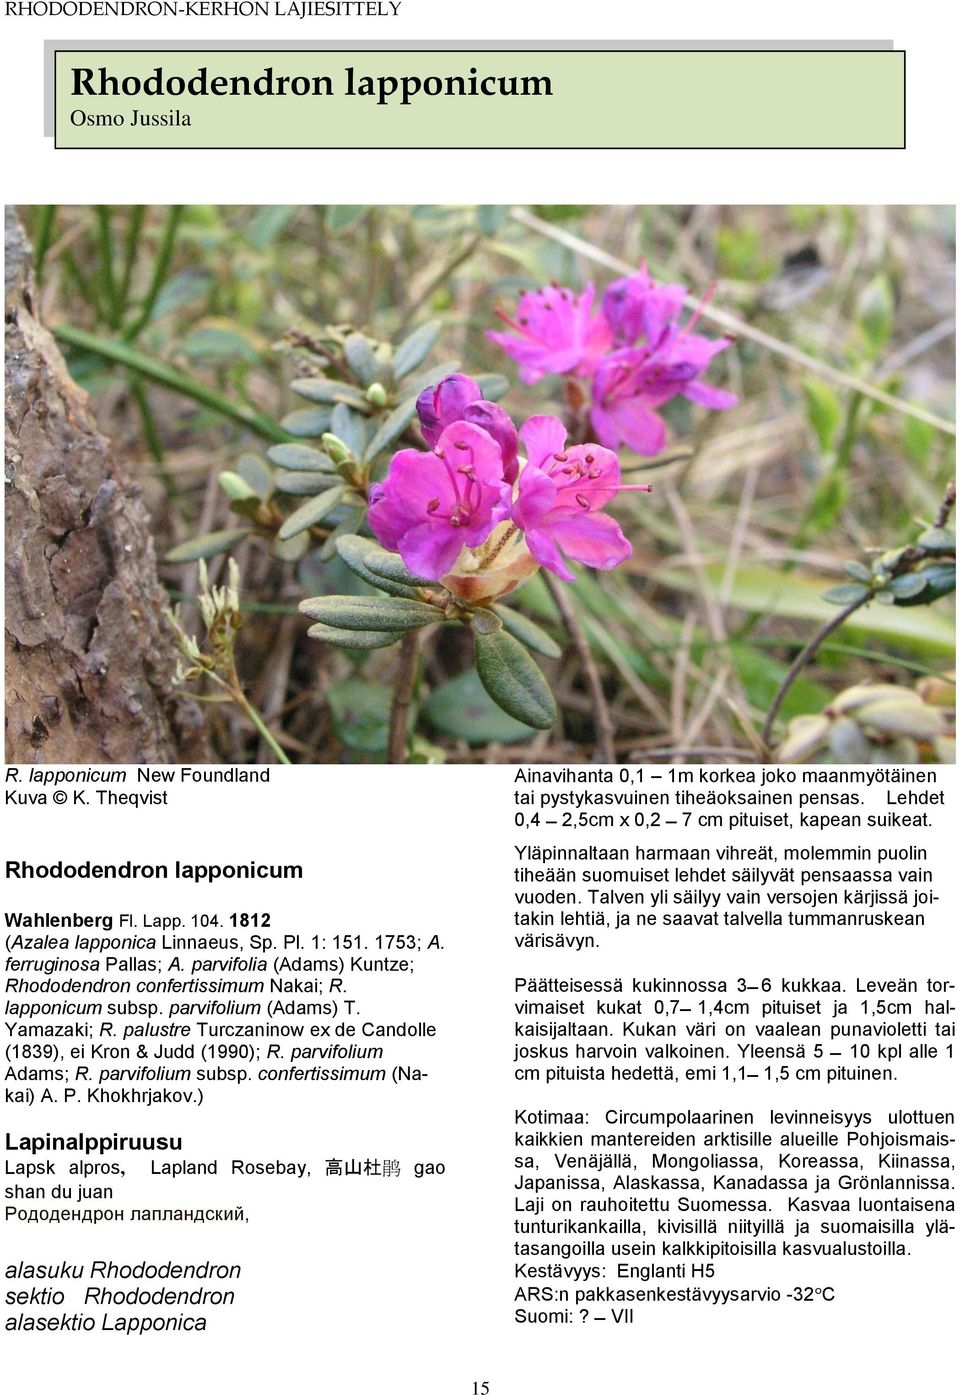 palustre Turczaninow ex de Candolle (1839), ei Kron & Judd (1990); R. parvifolium Adams; R. parvifolium subsp. confertissimum (Nakai) A. P. Khokhrjakov.